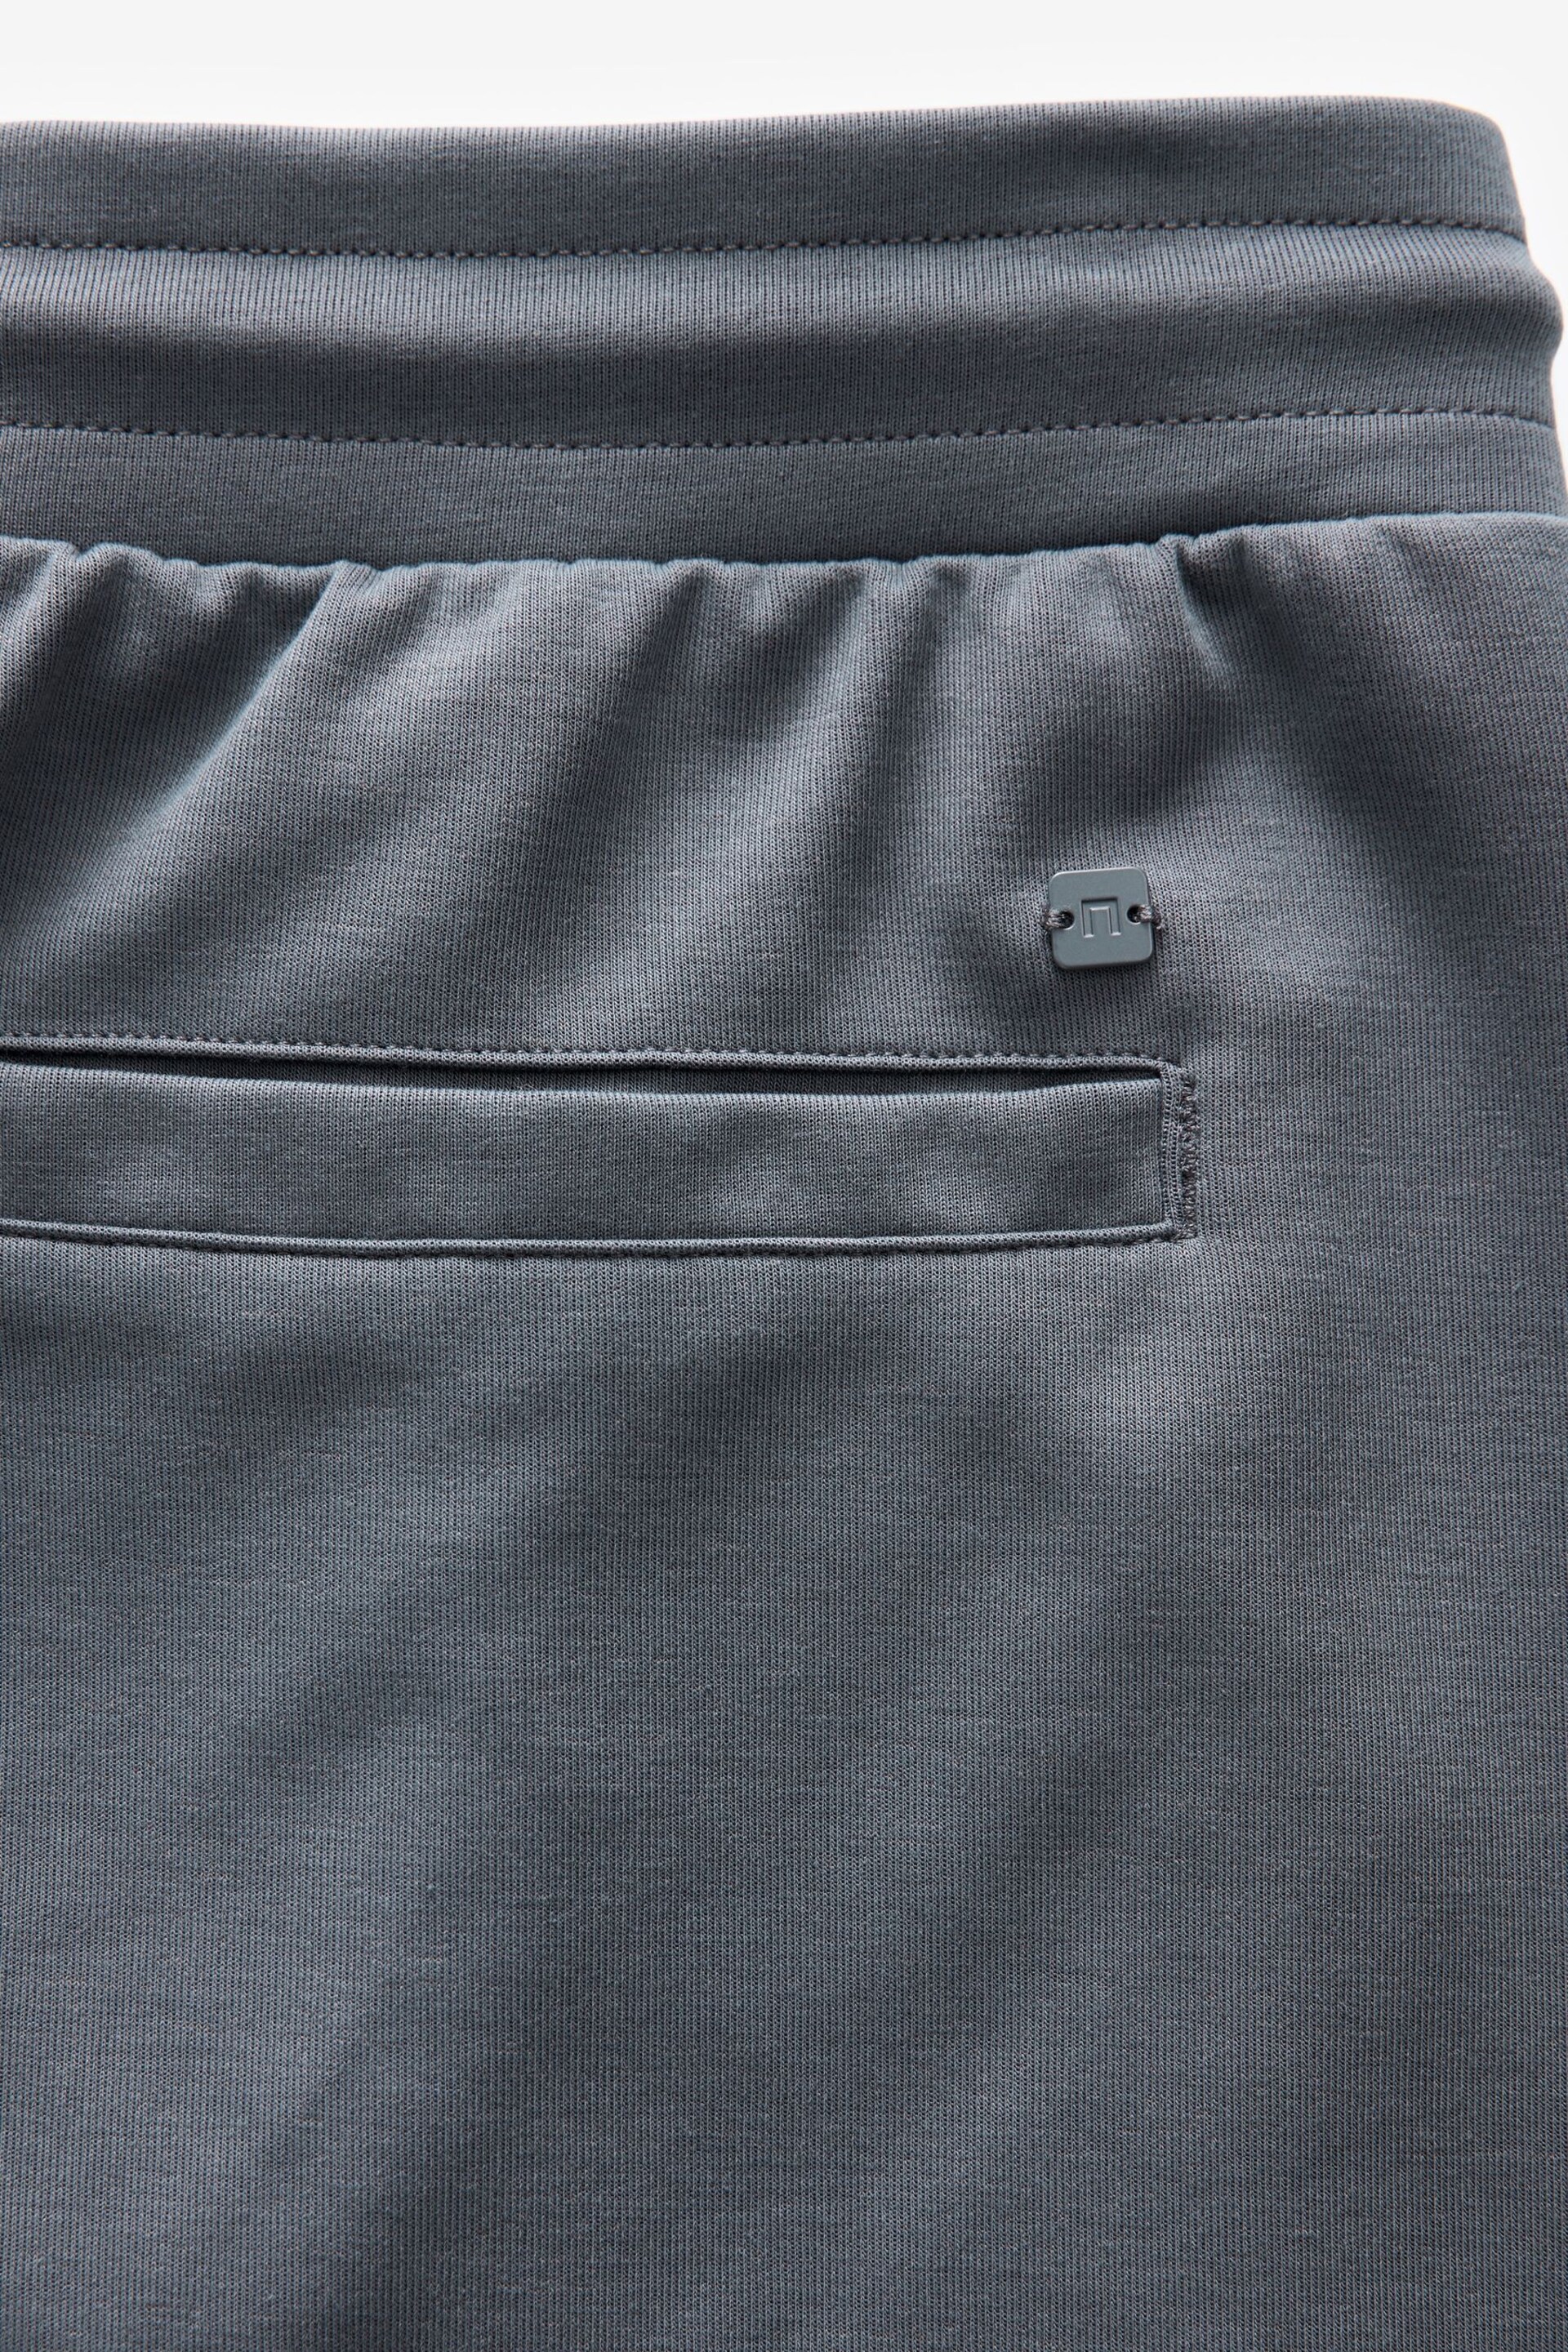 Slate Grey Zip Pocket Jersey Shorts - Image 5 of 8